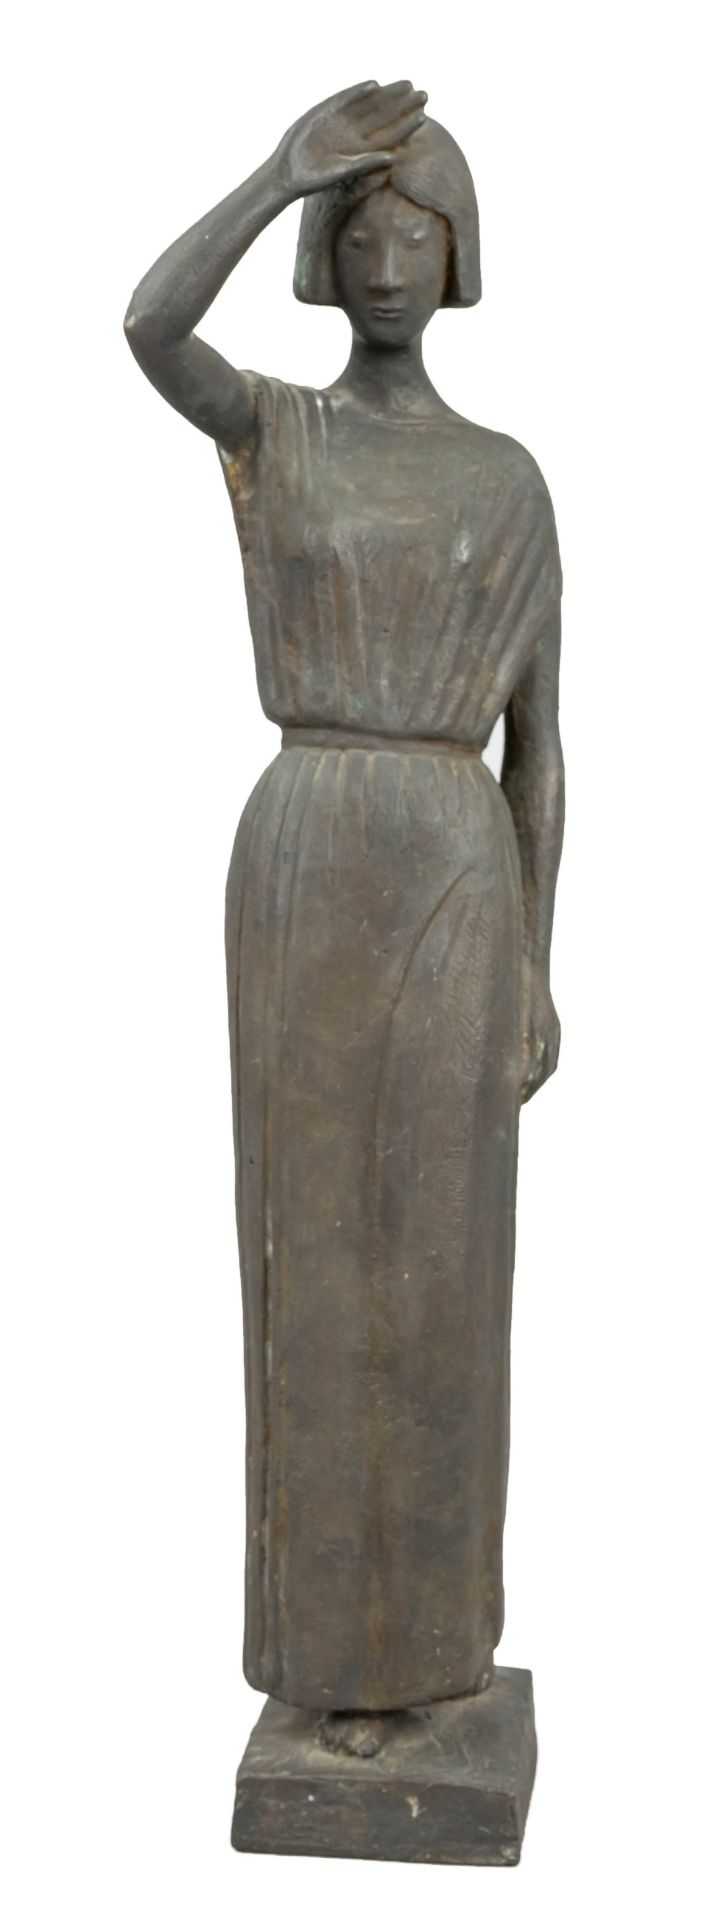 Marcks, Gerhard. 1889 Berlin - 1981 Burgbrohl. Small Amalasvinta. 1972. hollow bronze casting,